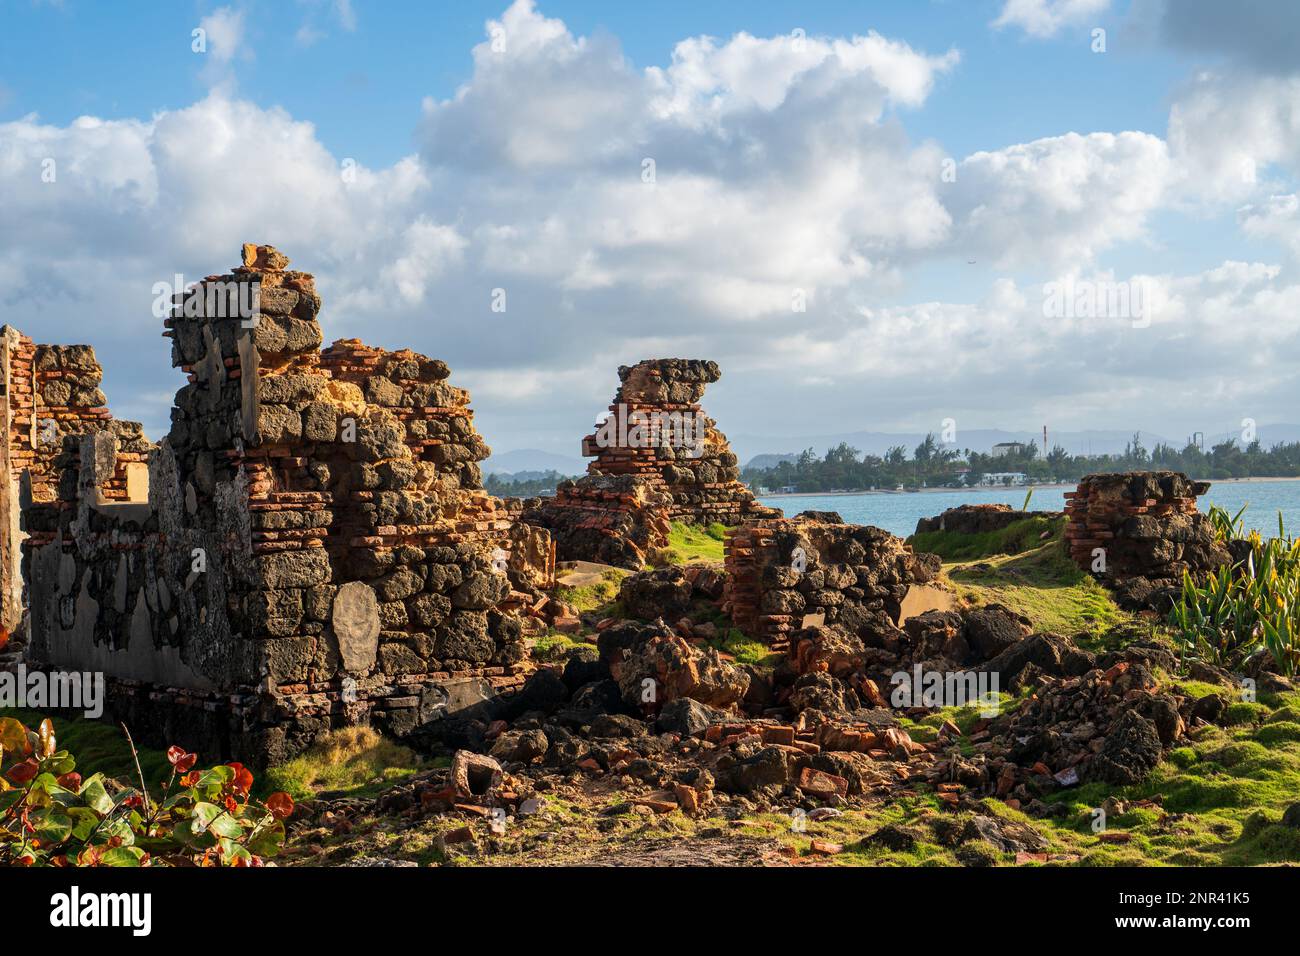 Ruins of Lazaretto isla de cabra San Juan Puerto Rico Stock Photo